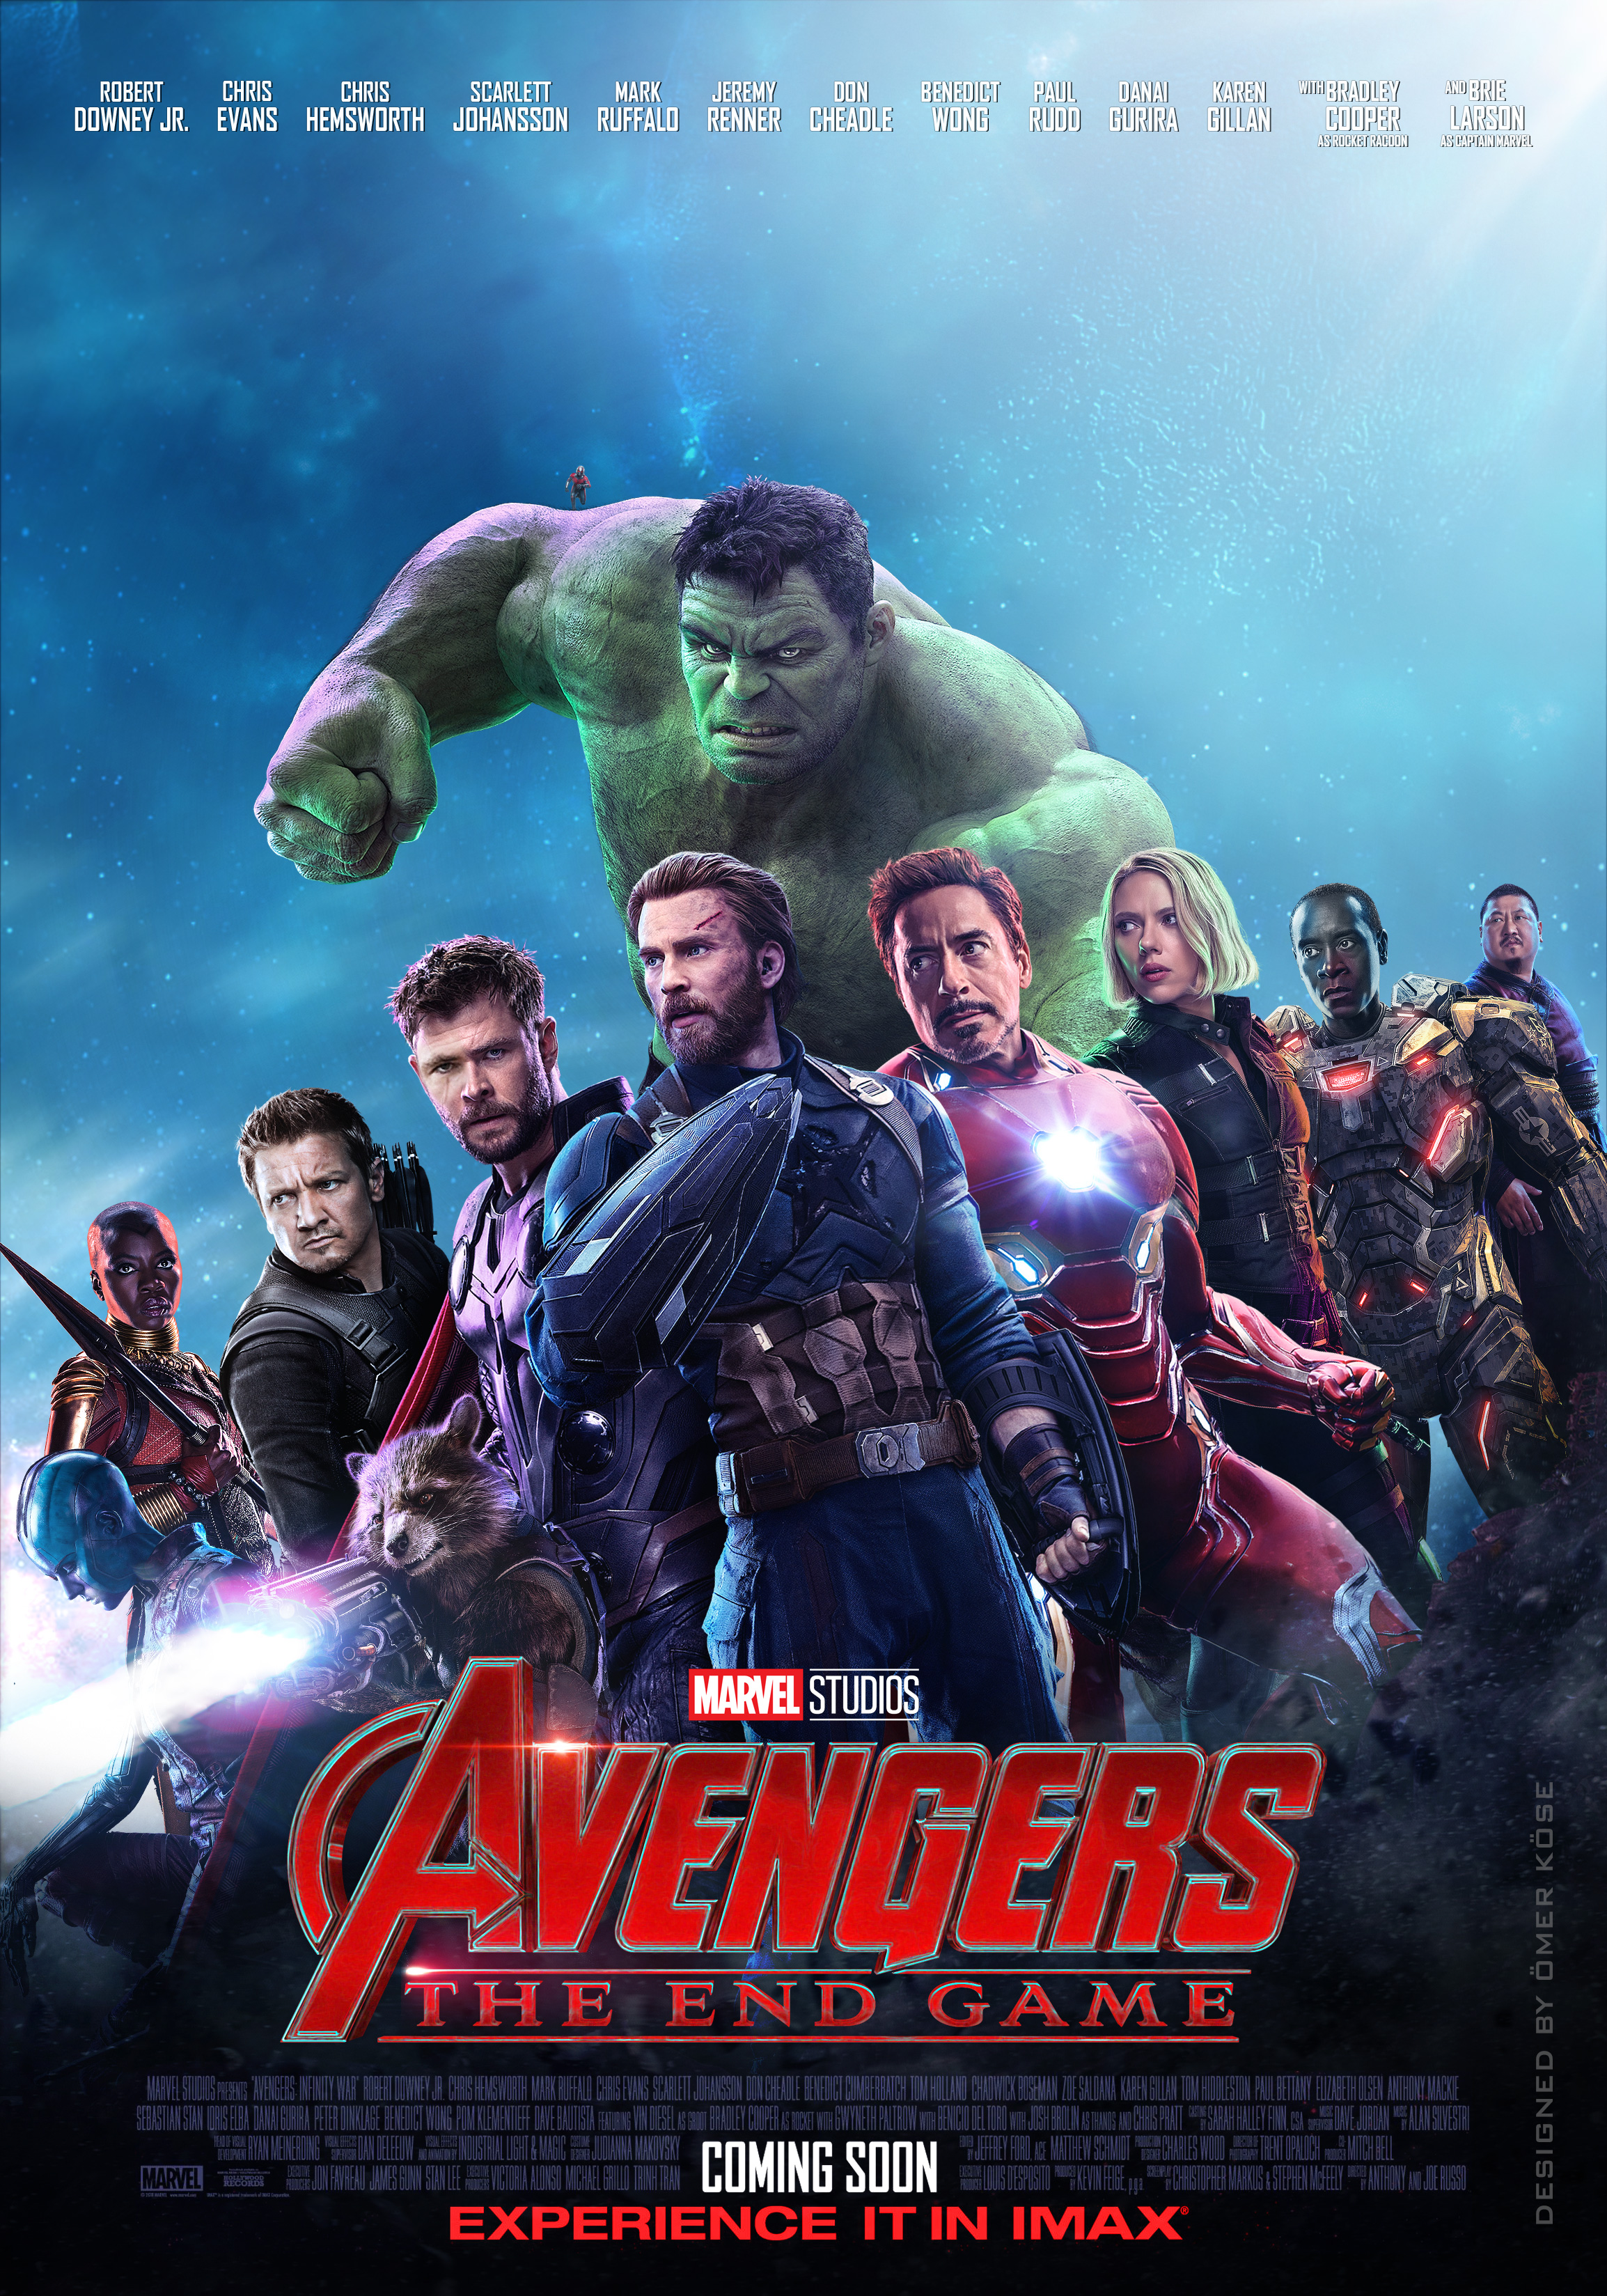 Avengers 4 Fan Posters Tease Endgame  Cosmic Book News